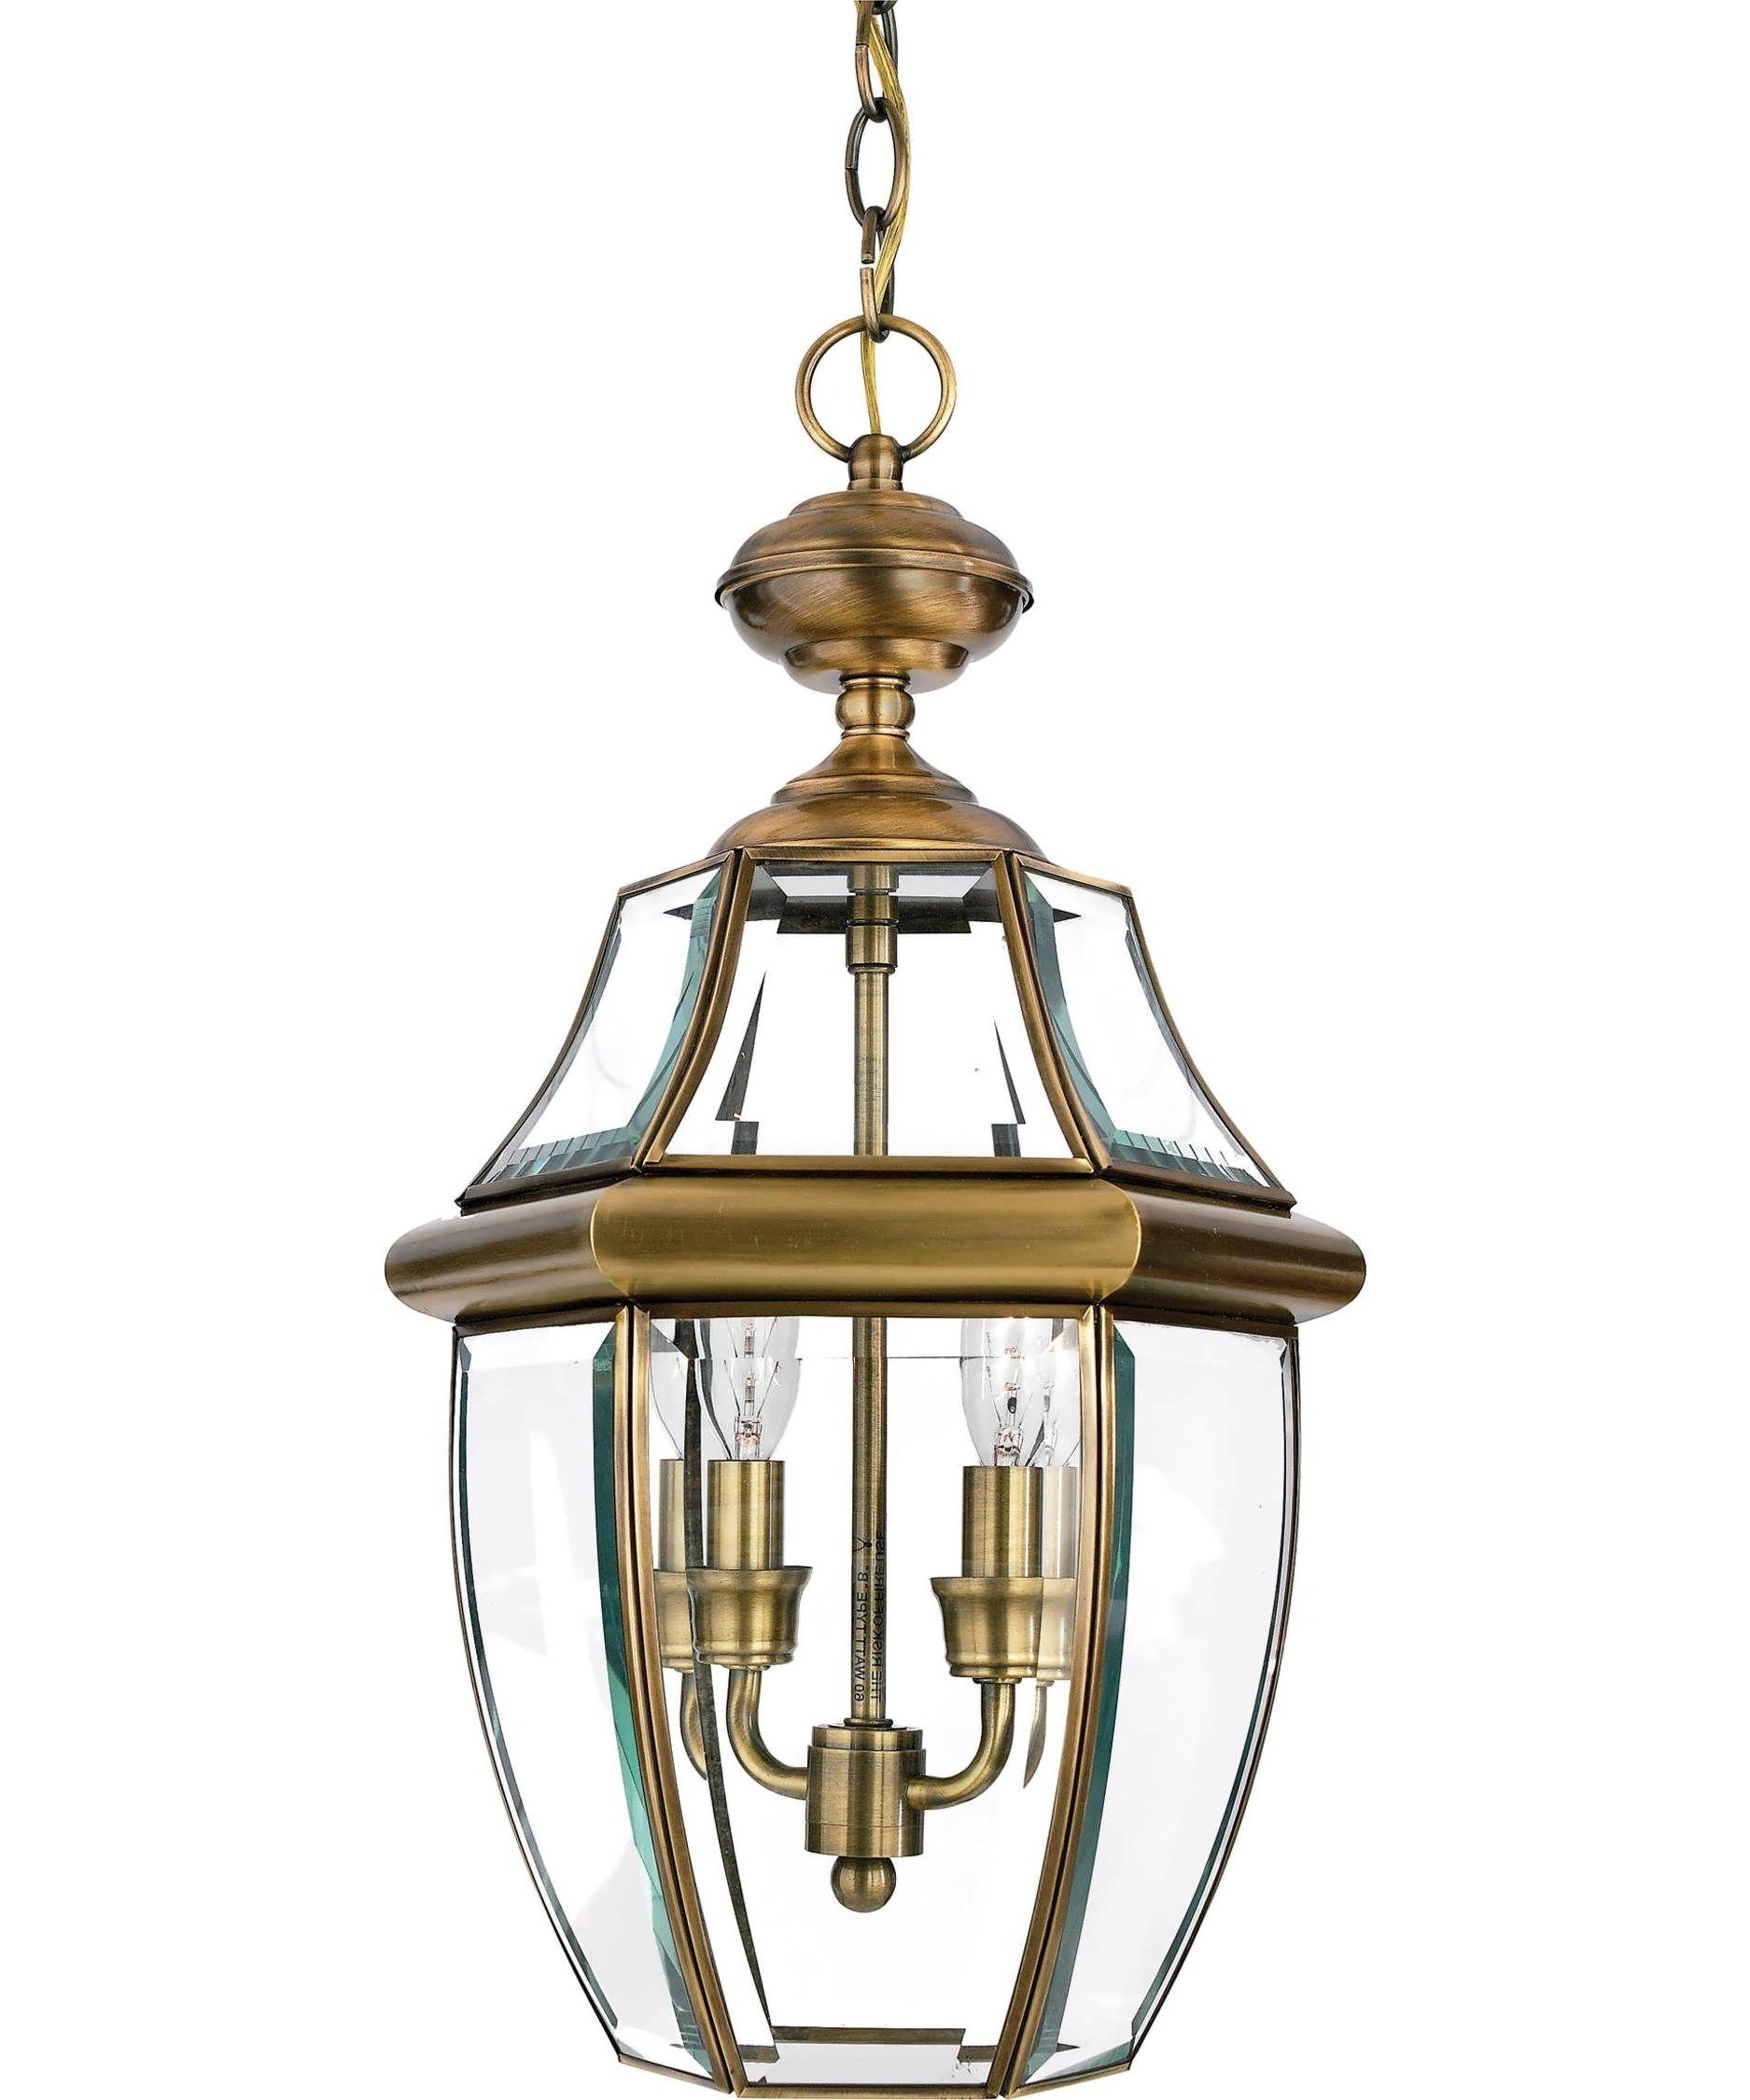 Popular Light : Dining Room Chandeliers Shell Chandelier Lighting Tiffany In Unusual Chandeliers (View 14 of 20)